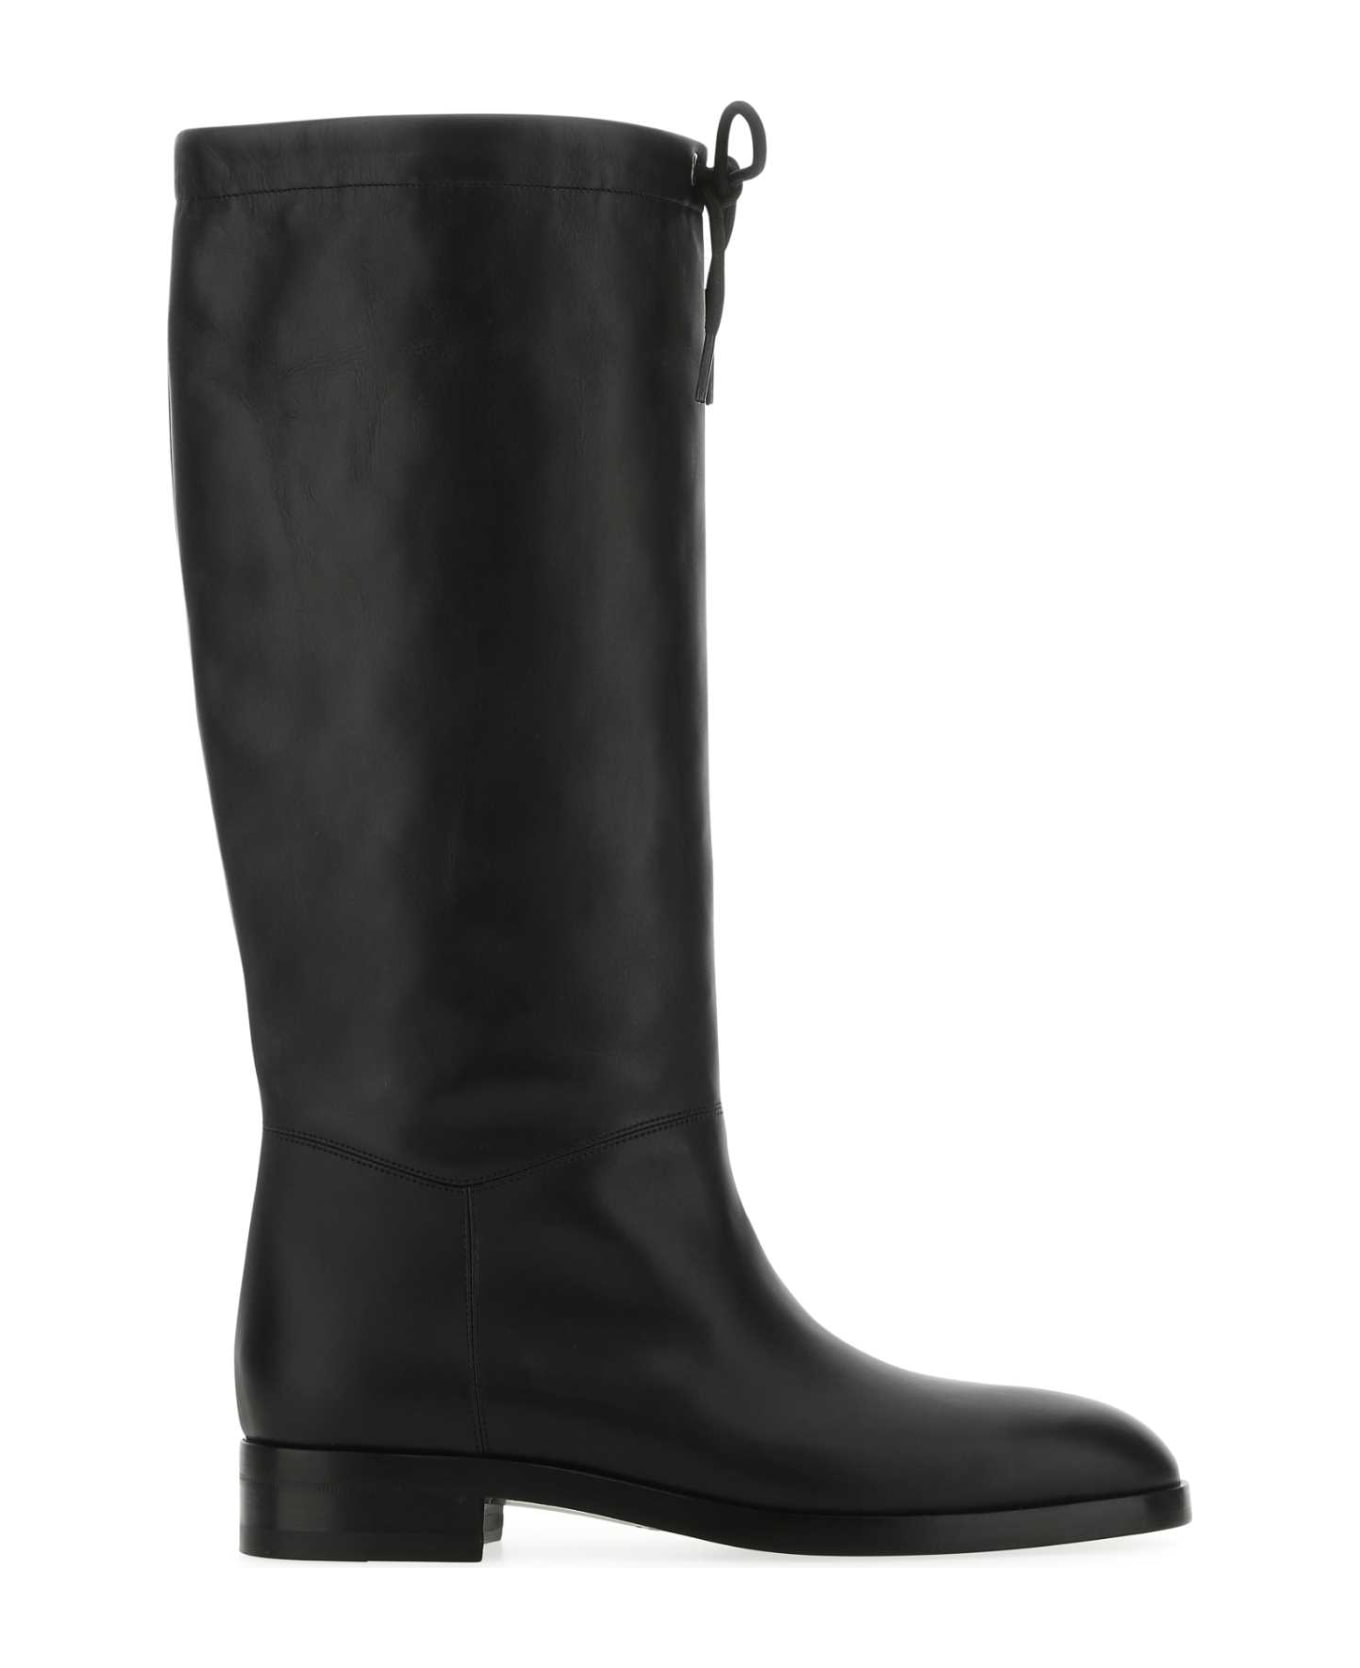 Gucci Black Leather Boots - Black ブーツ